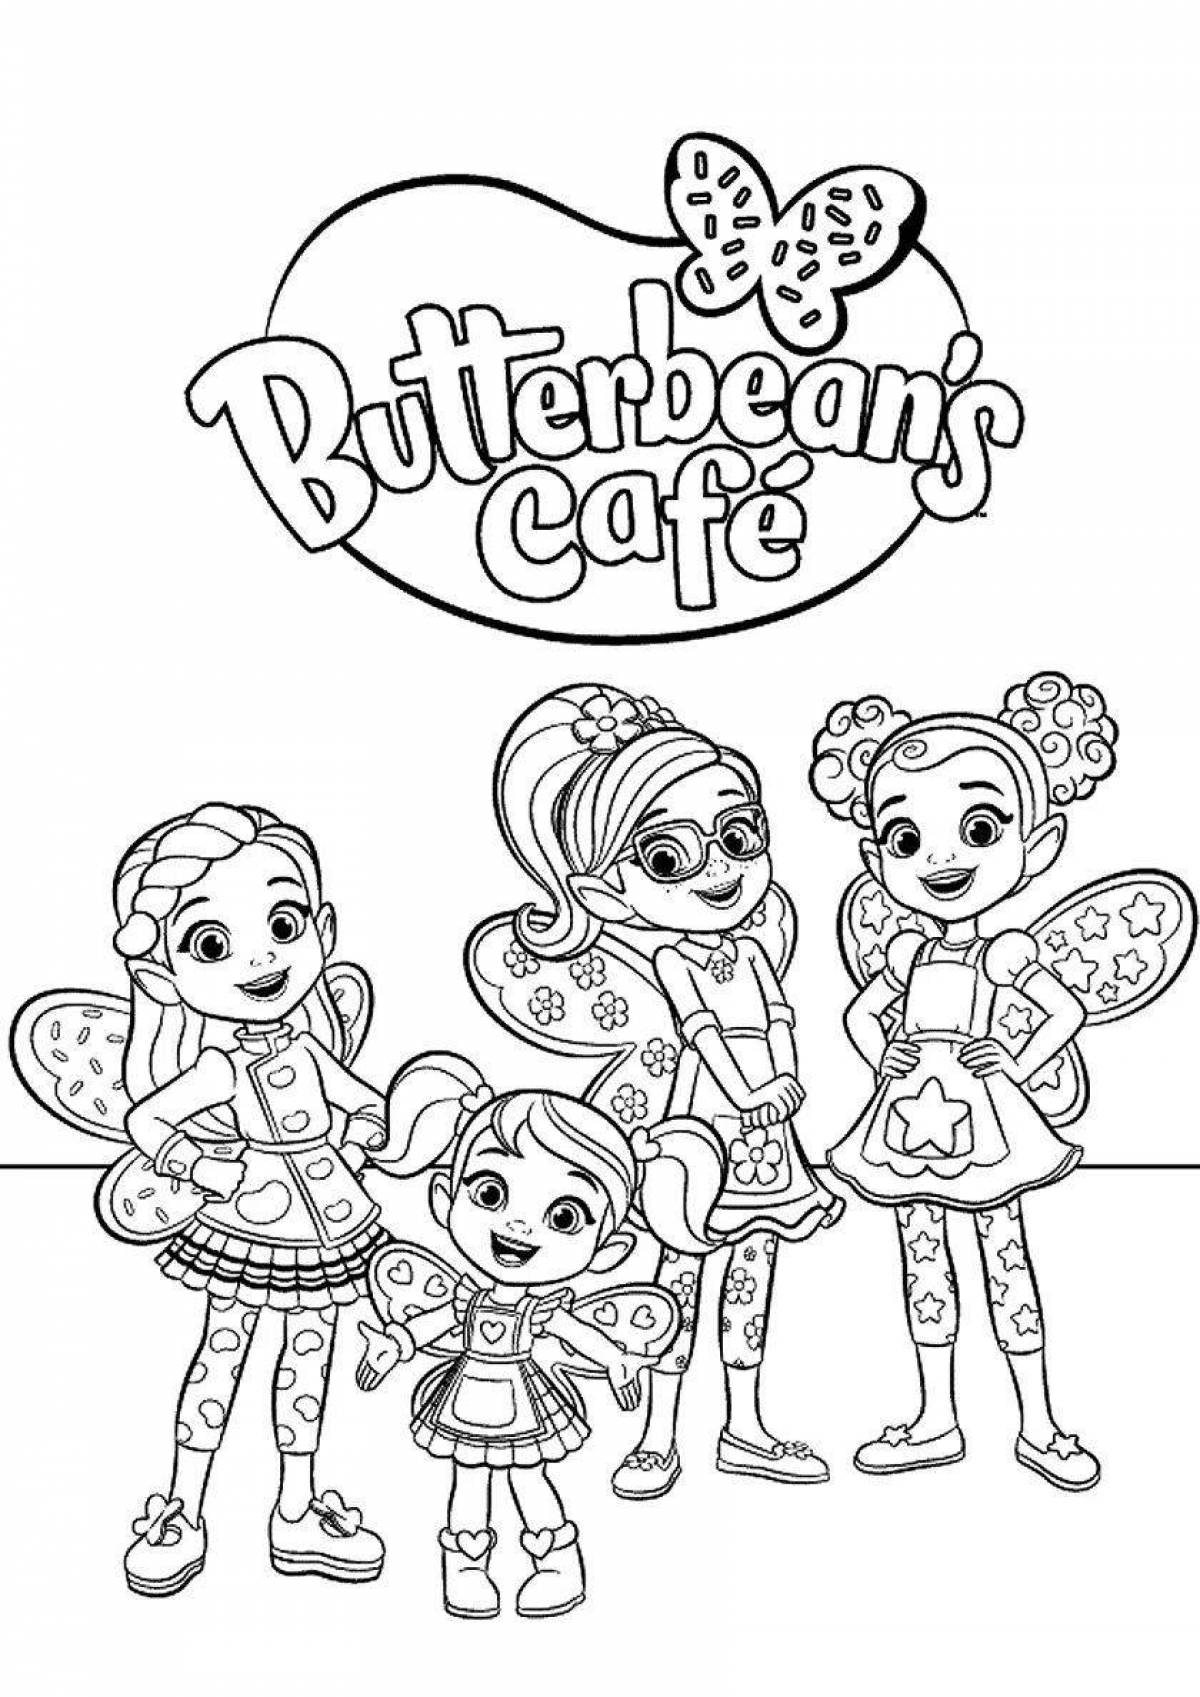 Game rakraskionline com cafe butterbean #4